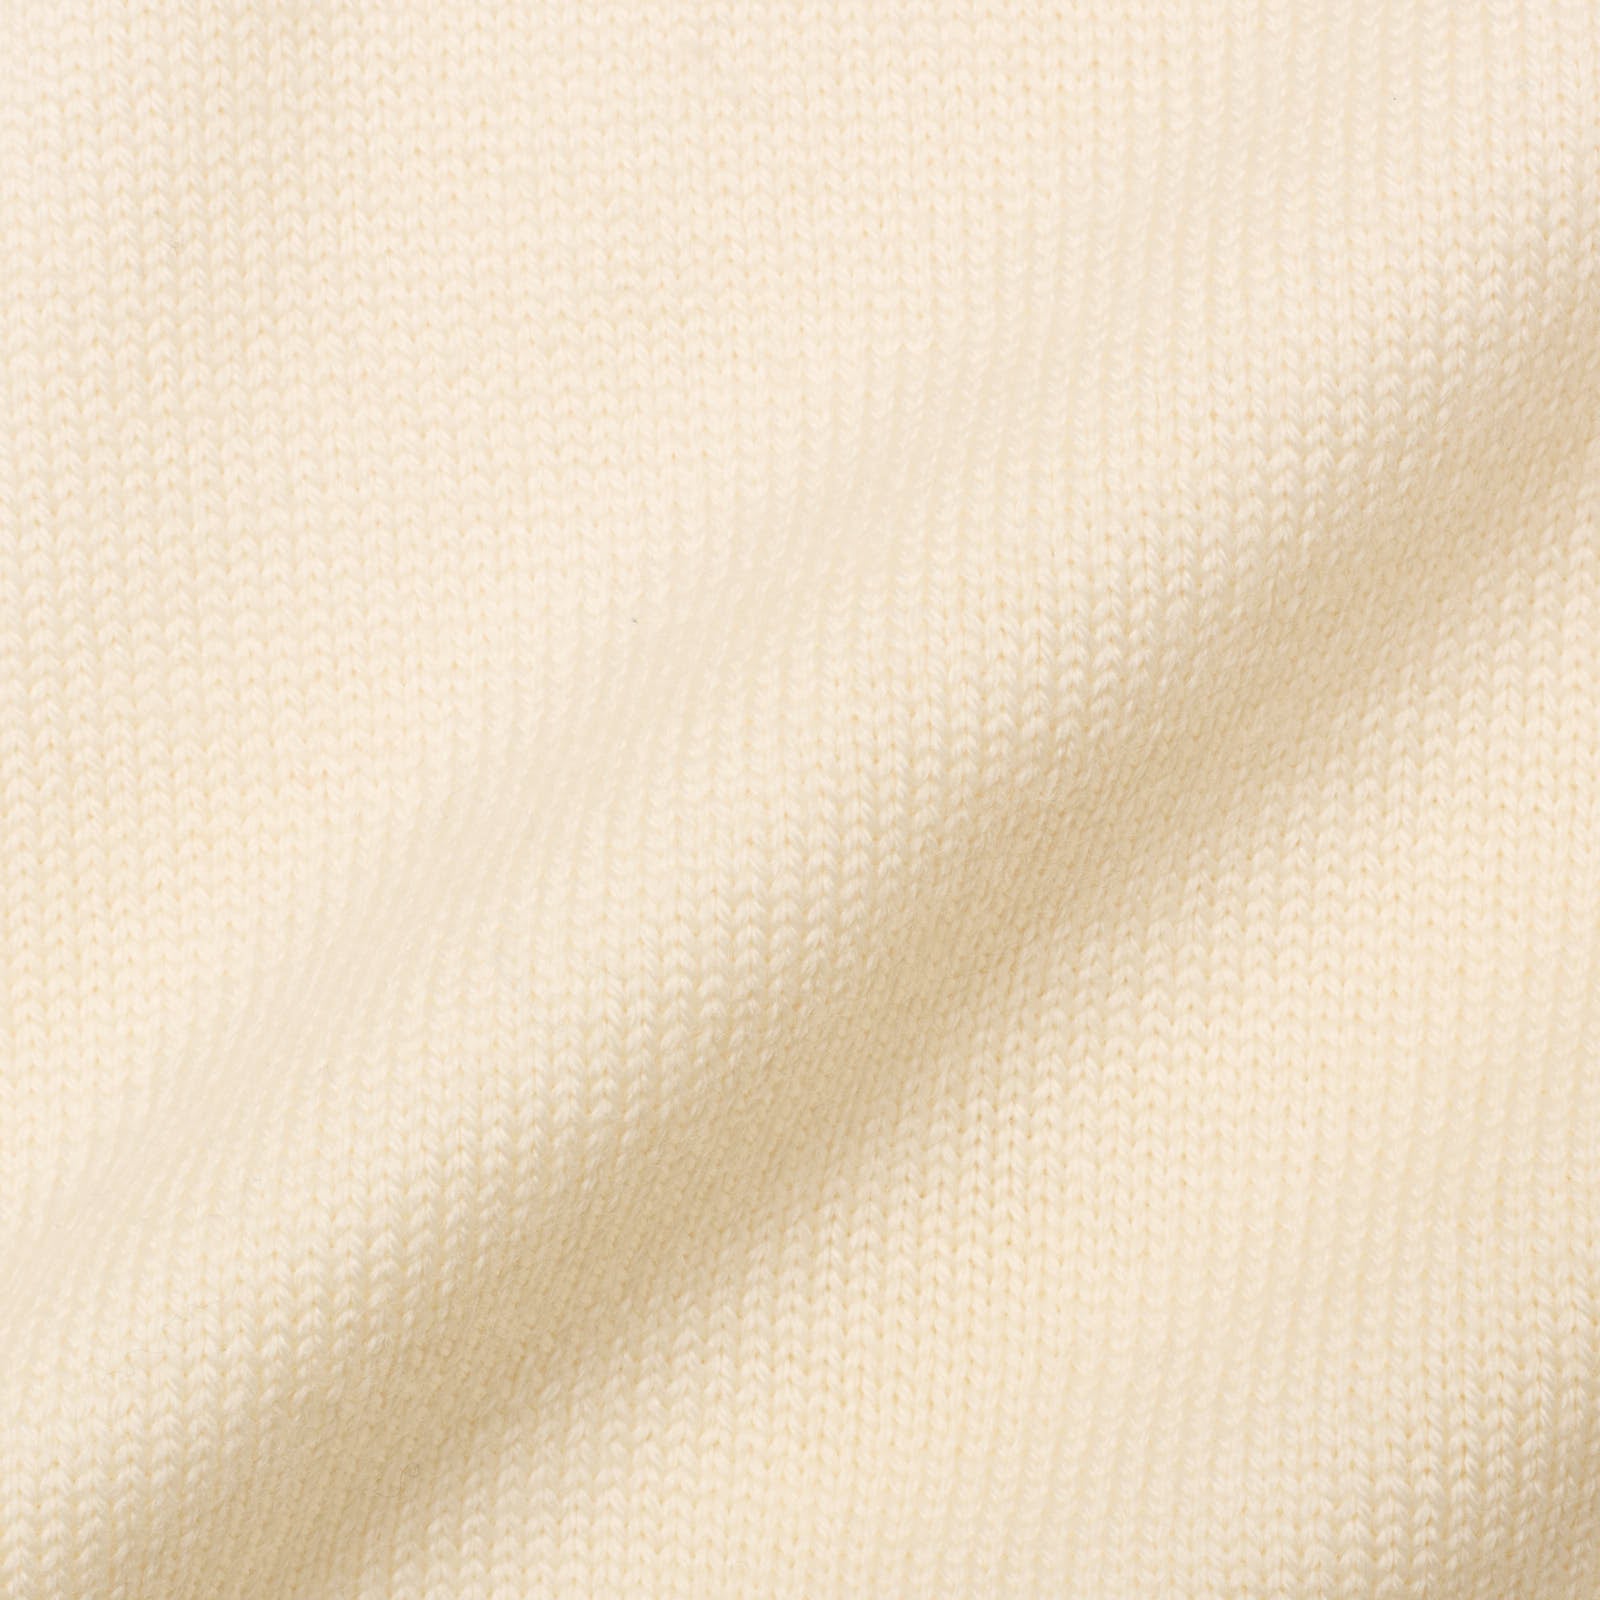 GRAN SASSO for VANNUCCI Off-White Virgin Wool Knit Turtleneck Sweater EU 58 NEW US XXL